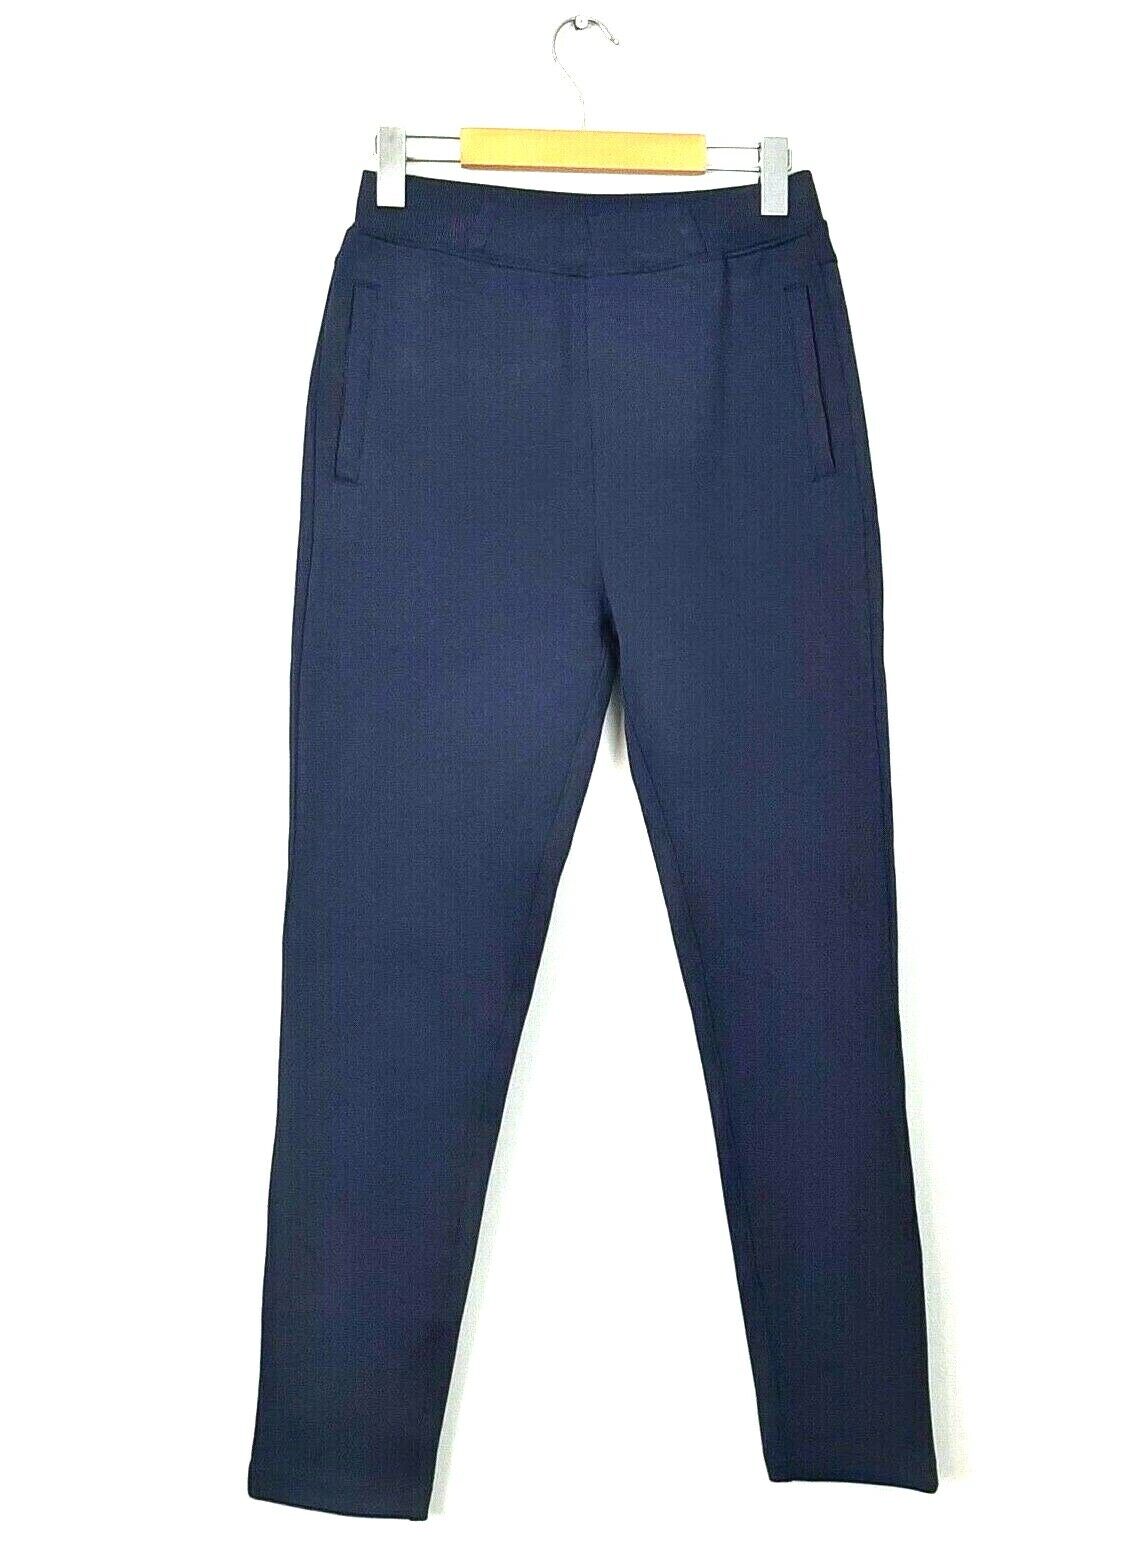 ROOTS Pants XS Navy Blue Cotton Knit Tapered Leg Stretch eBay